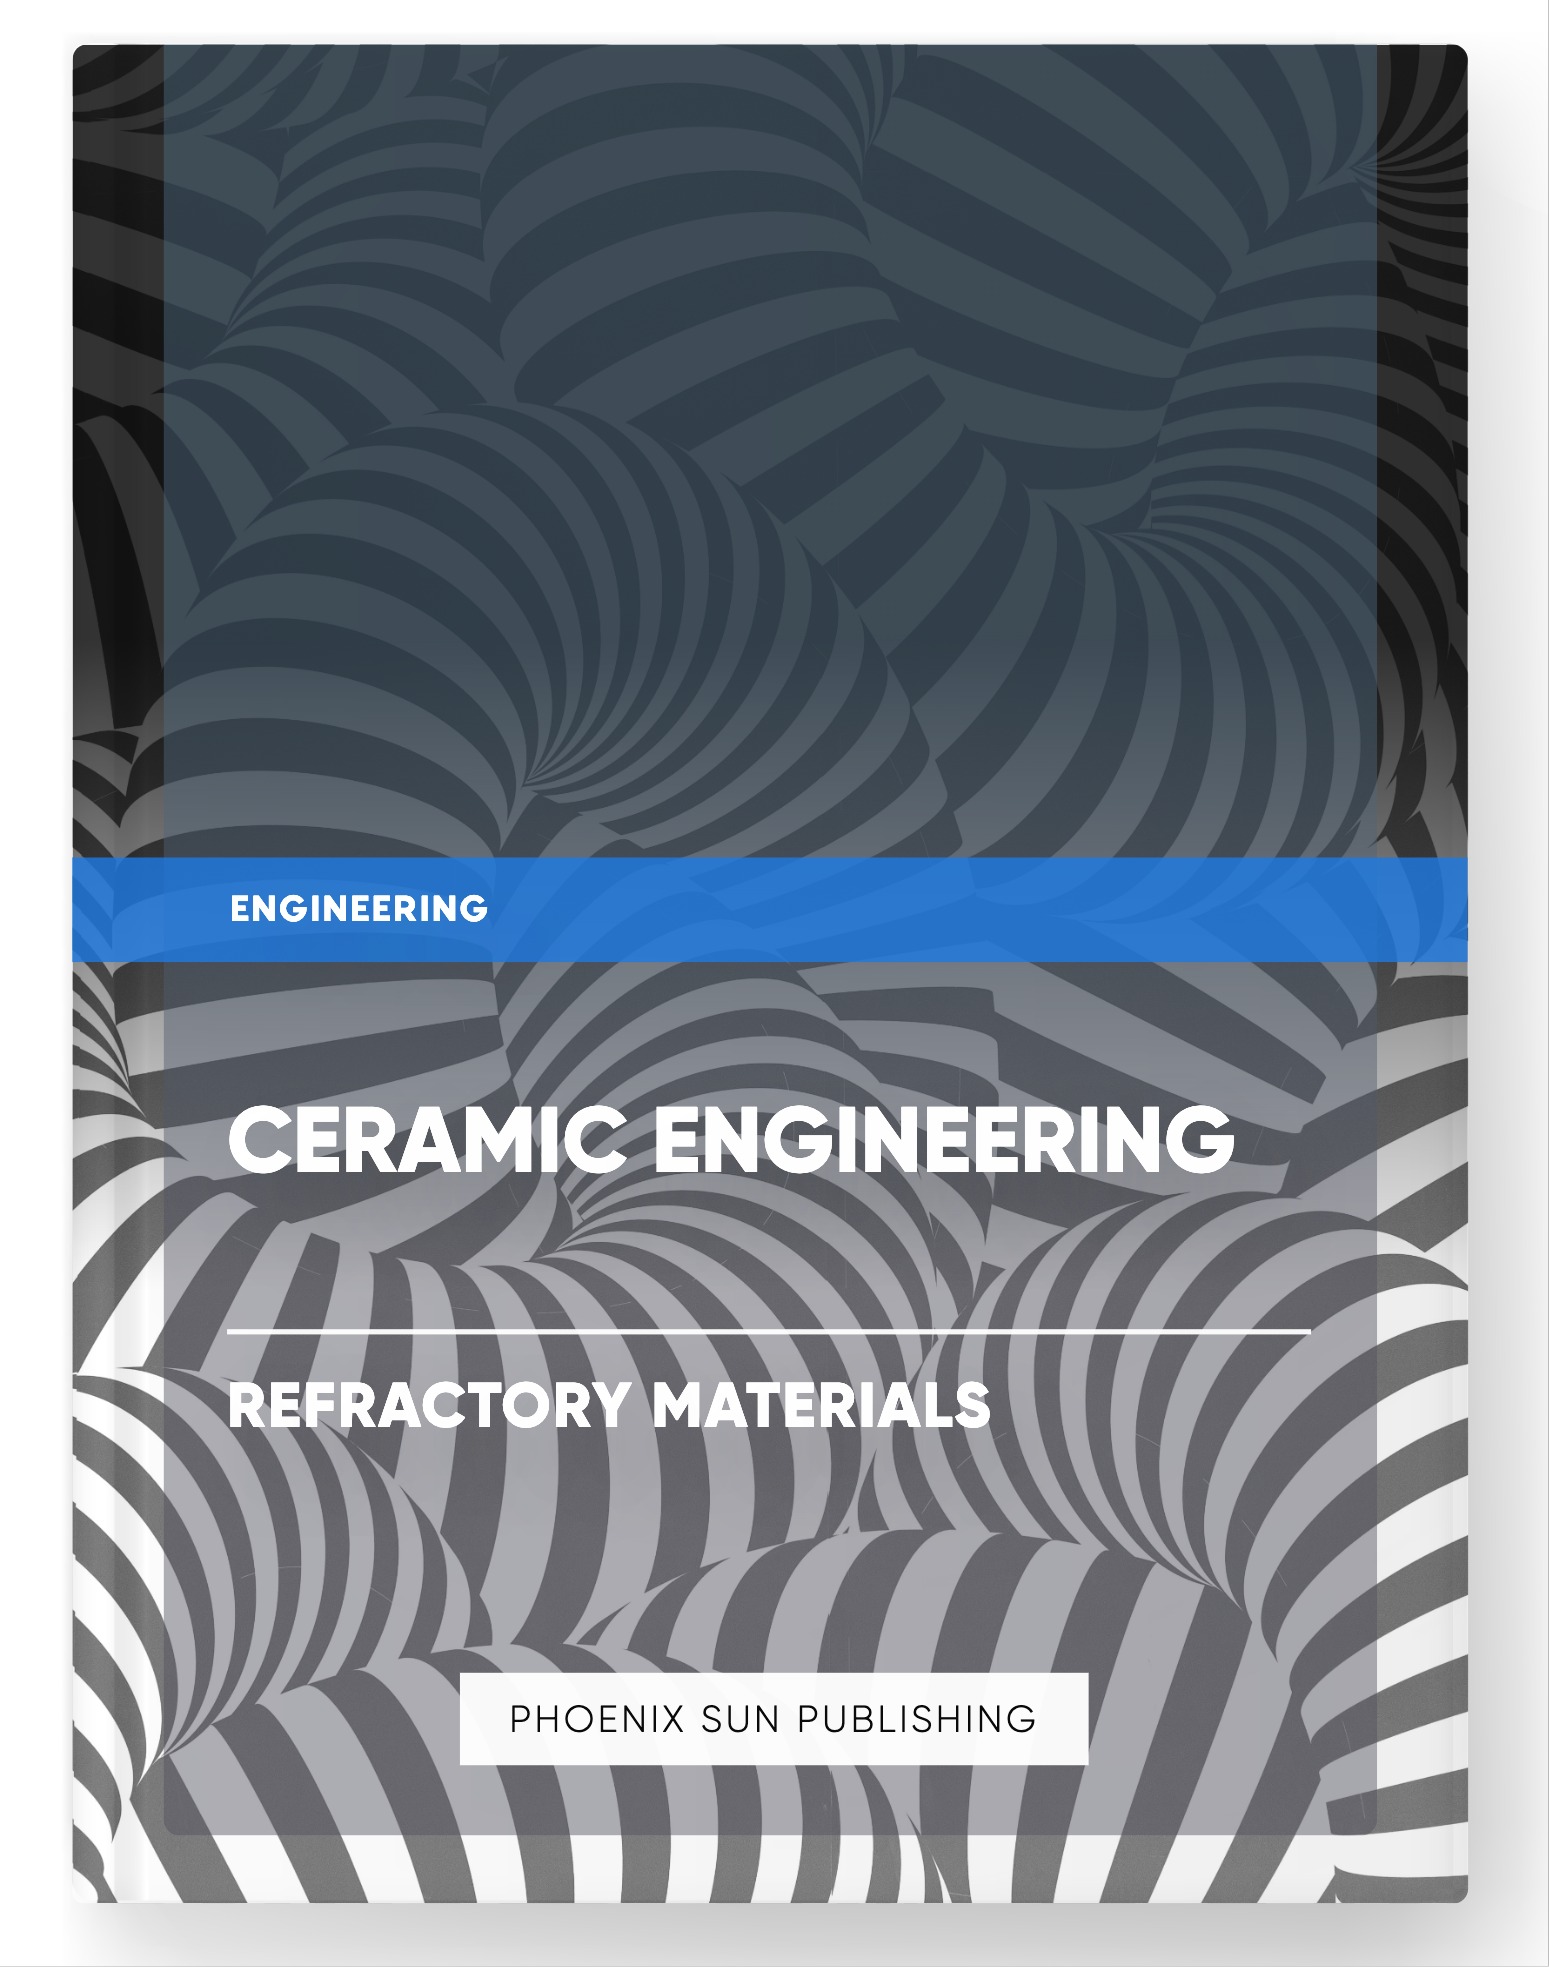 Ceramic Engineering – Refractory Materials